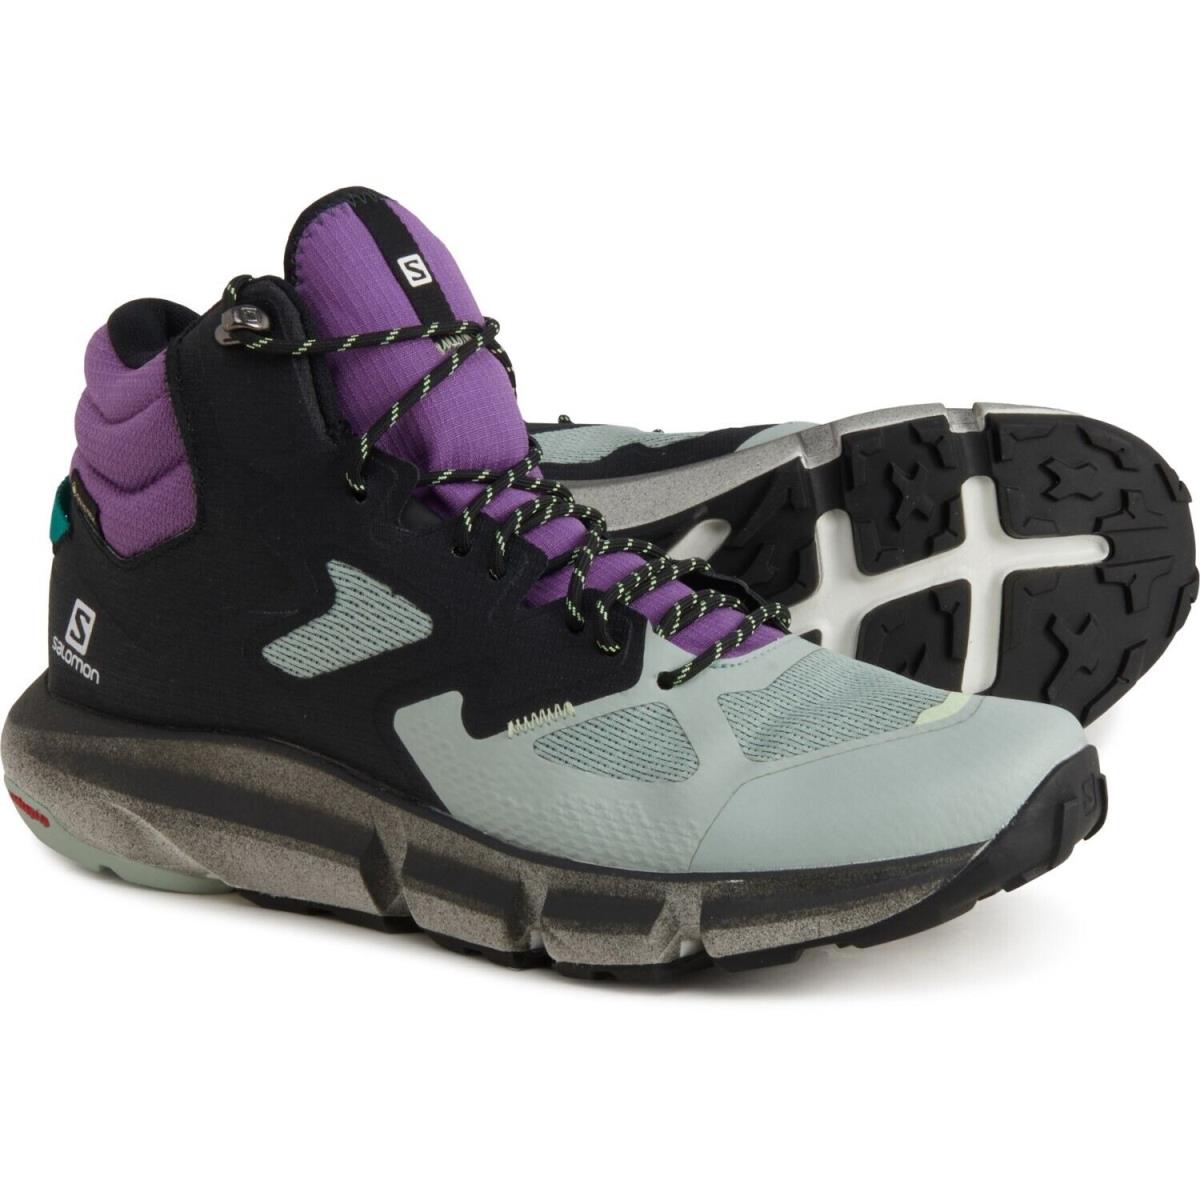 Salomon Predict Gore-tex Mid Hiking Shoes Waterproof